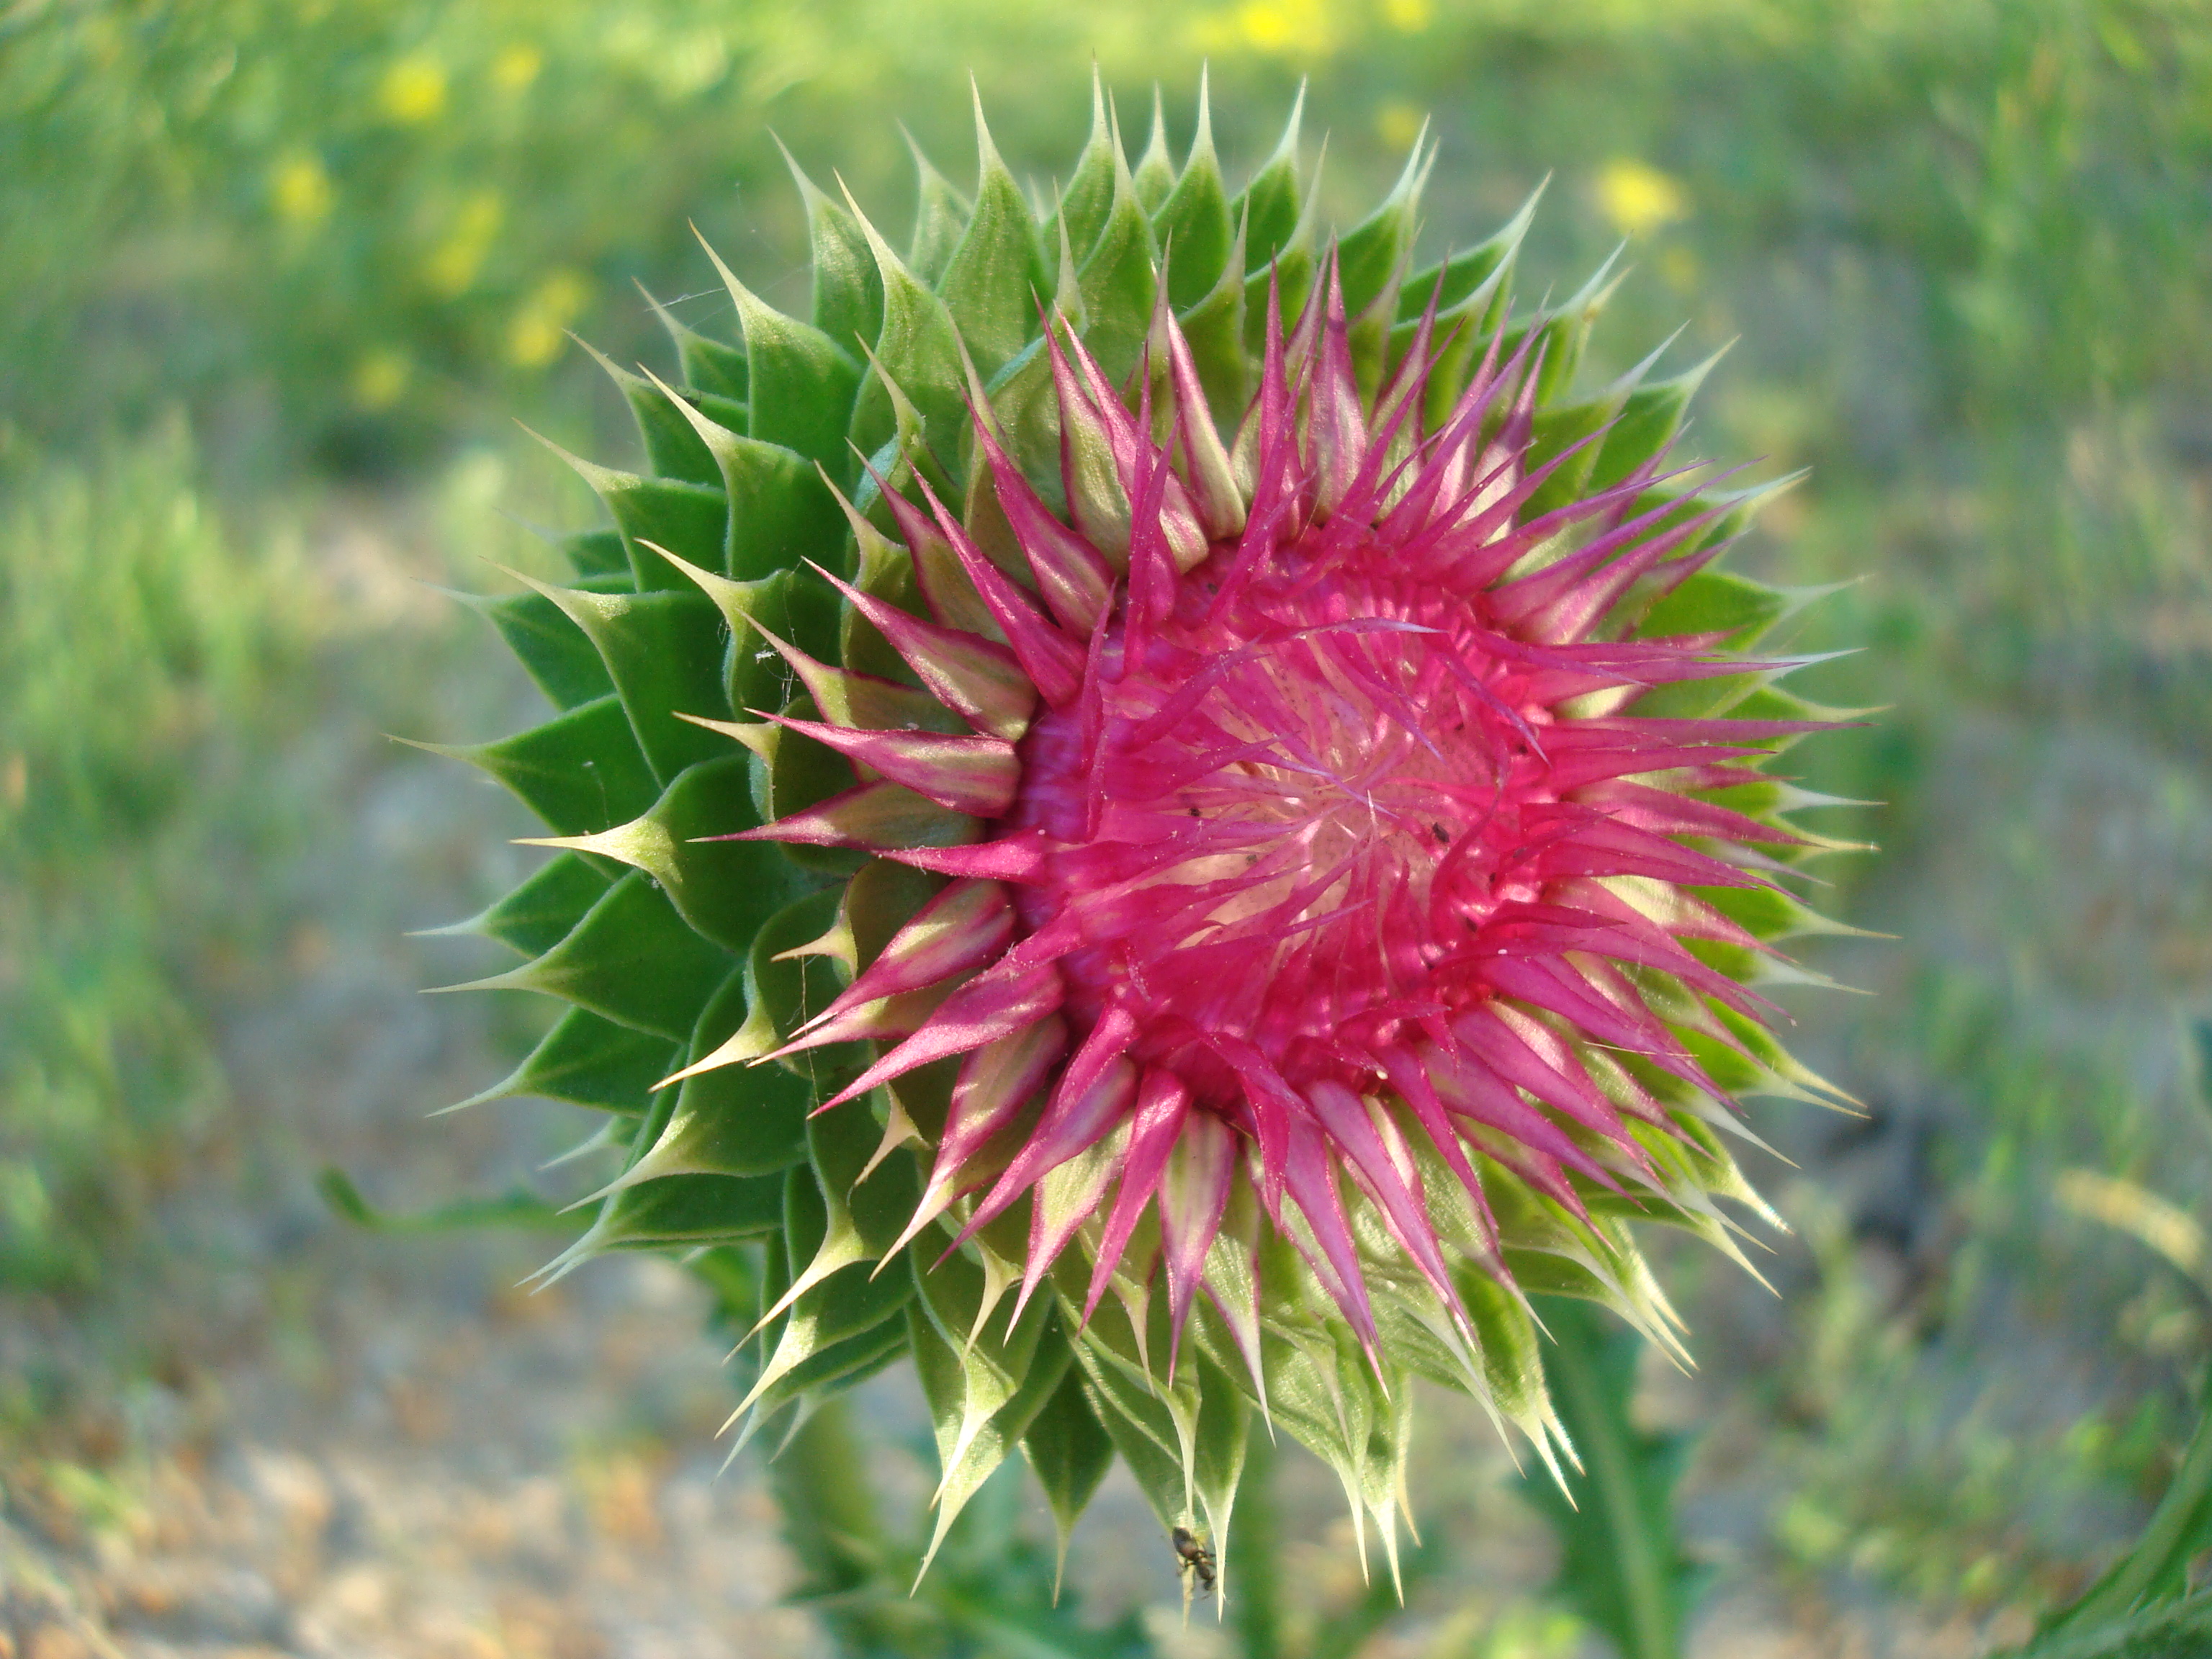 Thistle plant close-up photo